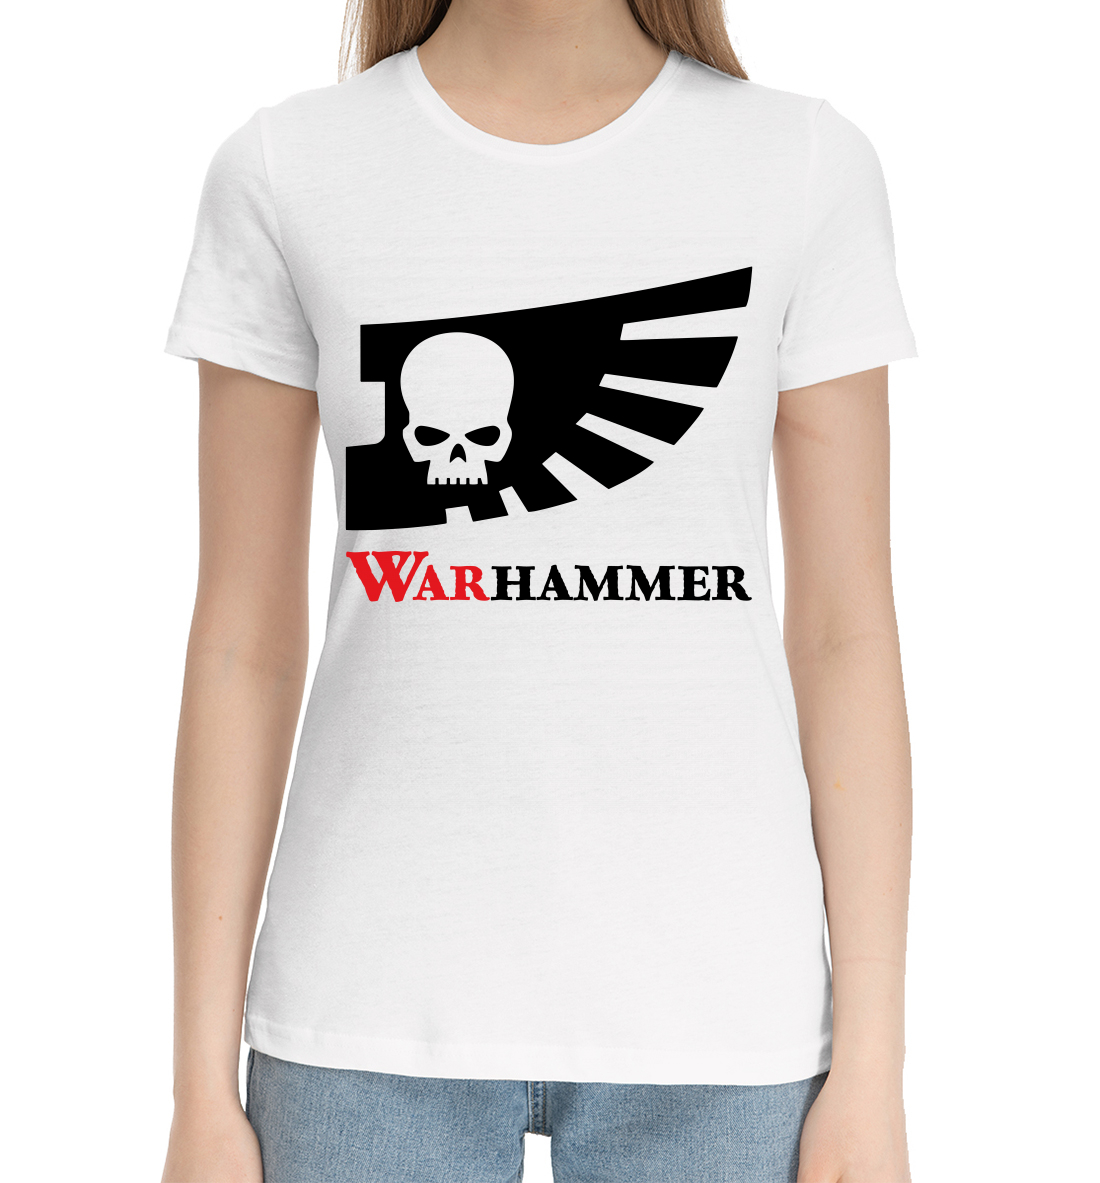 Женская Хлопковая футболка с принтом Warhammer, артикул WHR-789781-hfu-1mp